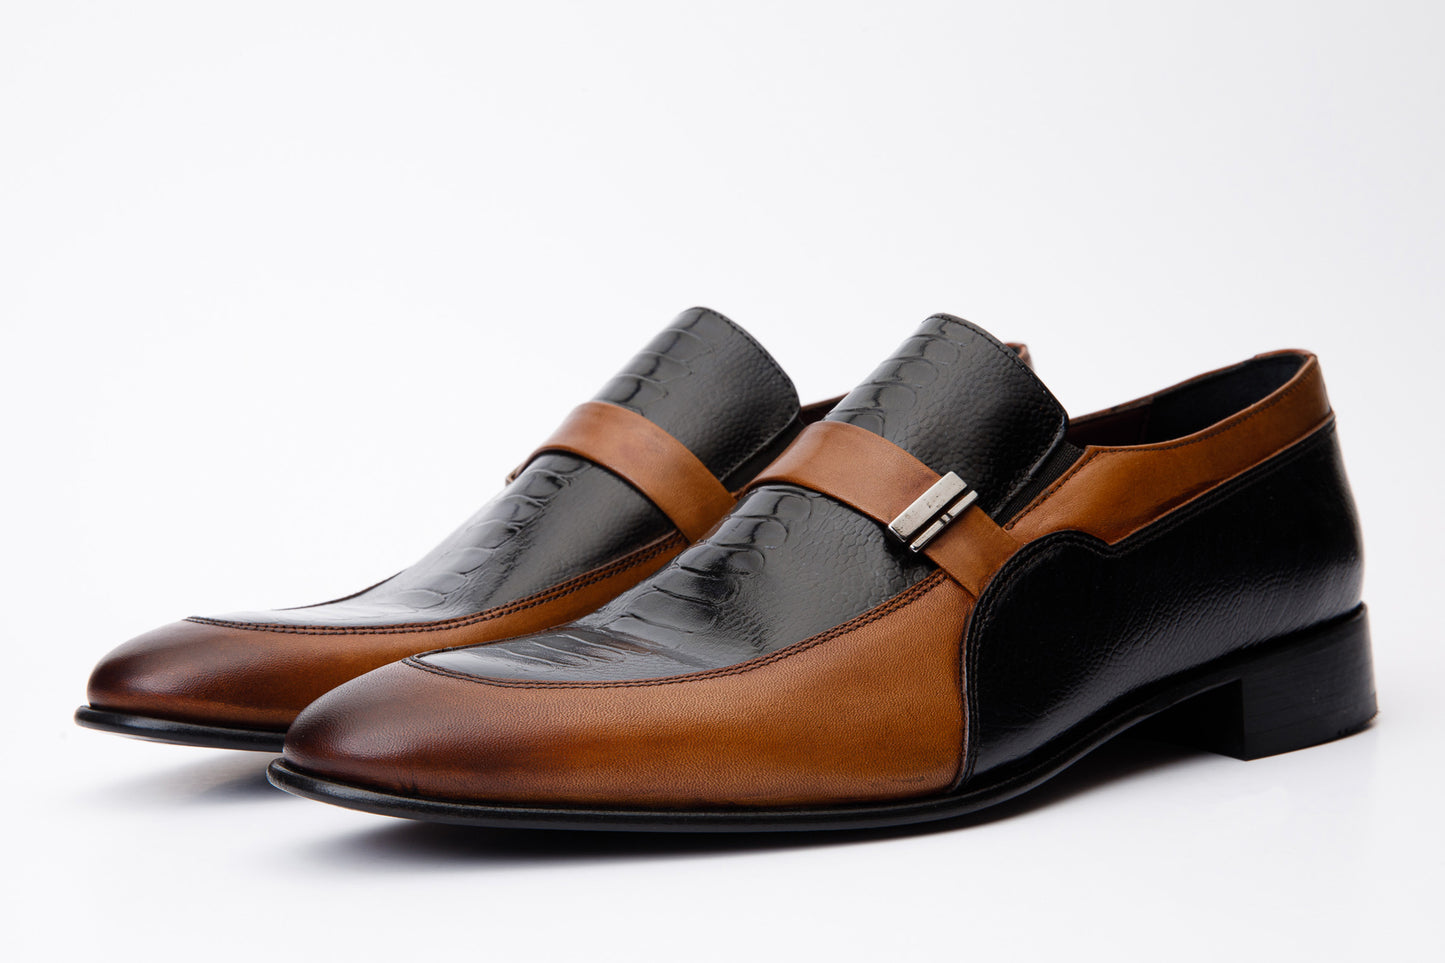 The Kazablanka Brown & Navy Leather Bit Loafer Men Shoe